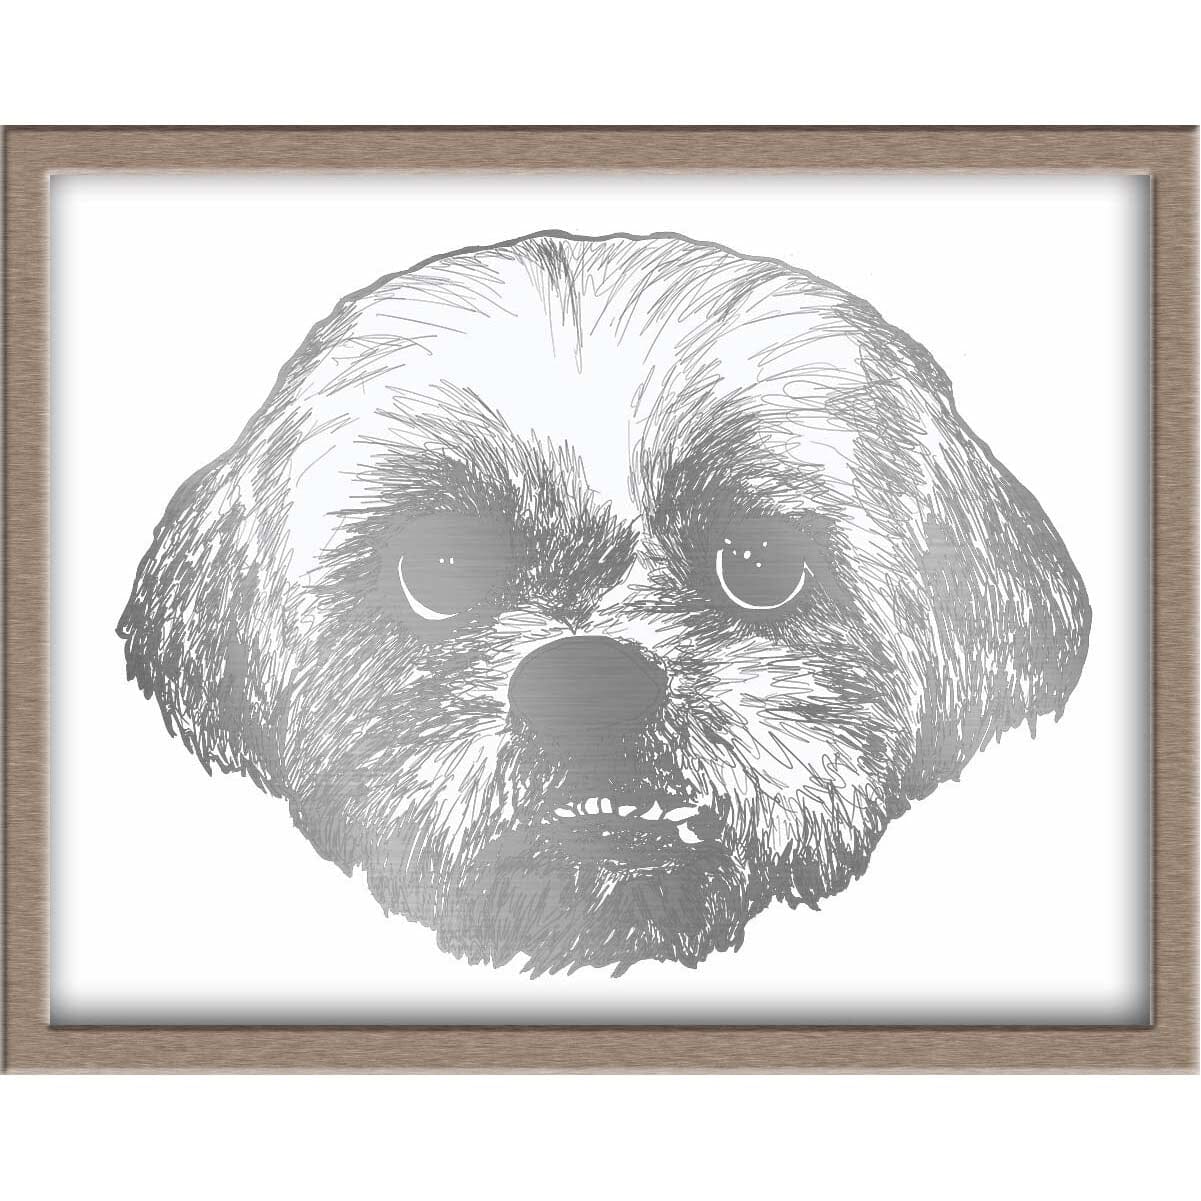 Shih Tzu Dog Portrait Foiled Print (TomTom) Posters, Prints, & Visual Artwork JoyousJoyfulJoyness 